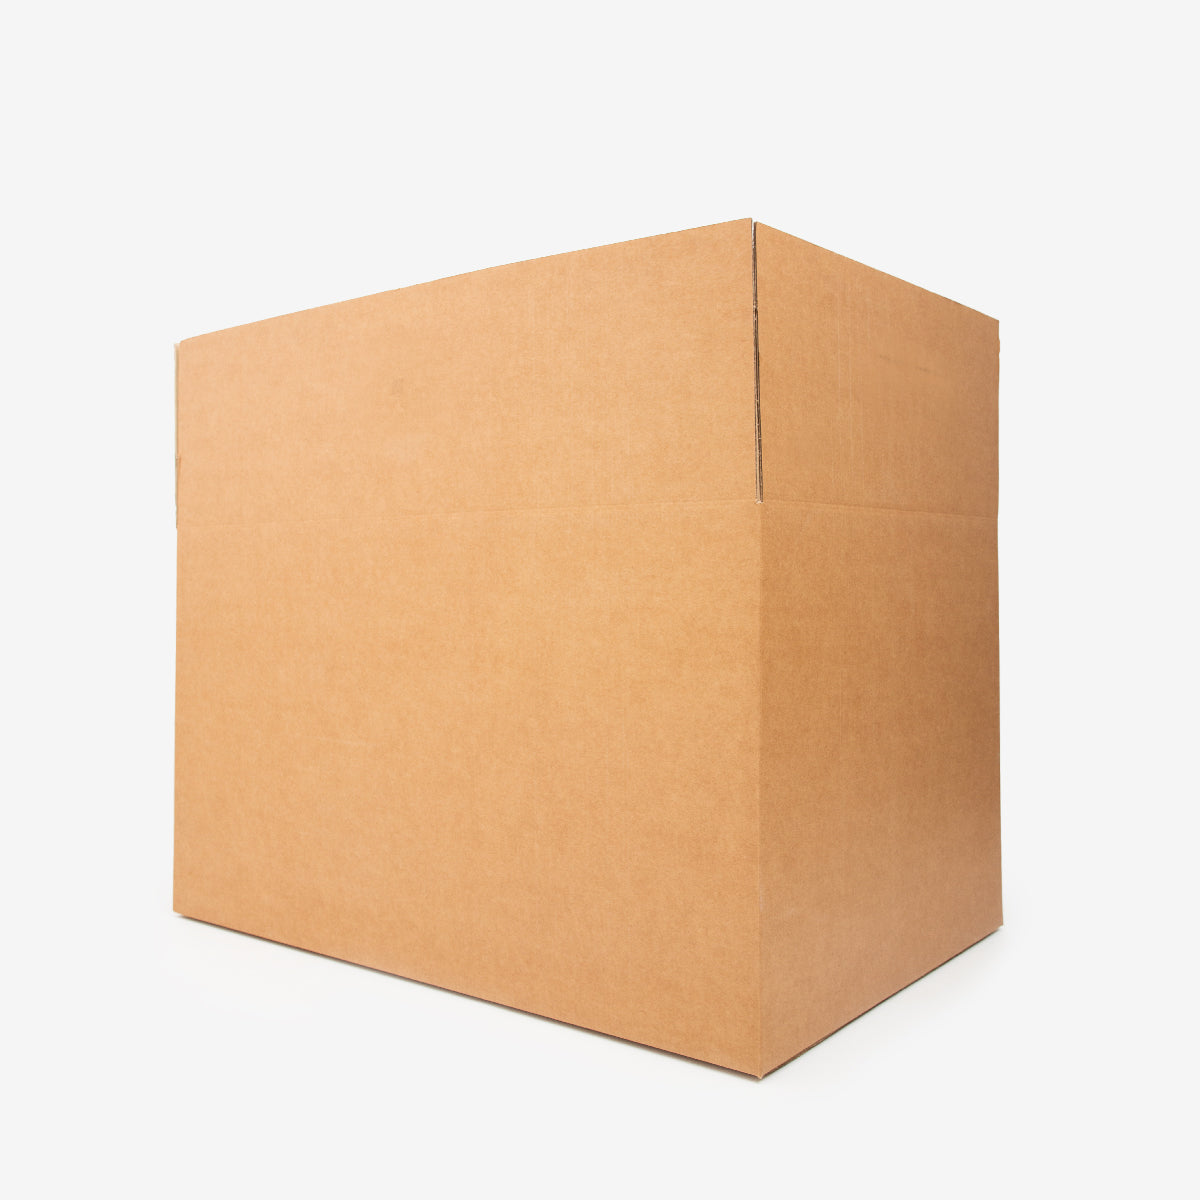 American style double wave cardboard box BC 120x80x80 cm havana SCT21